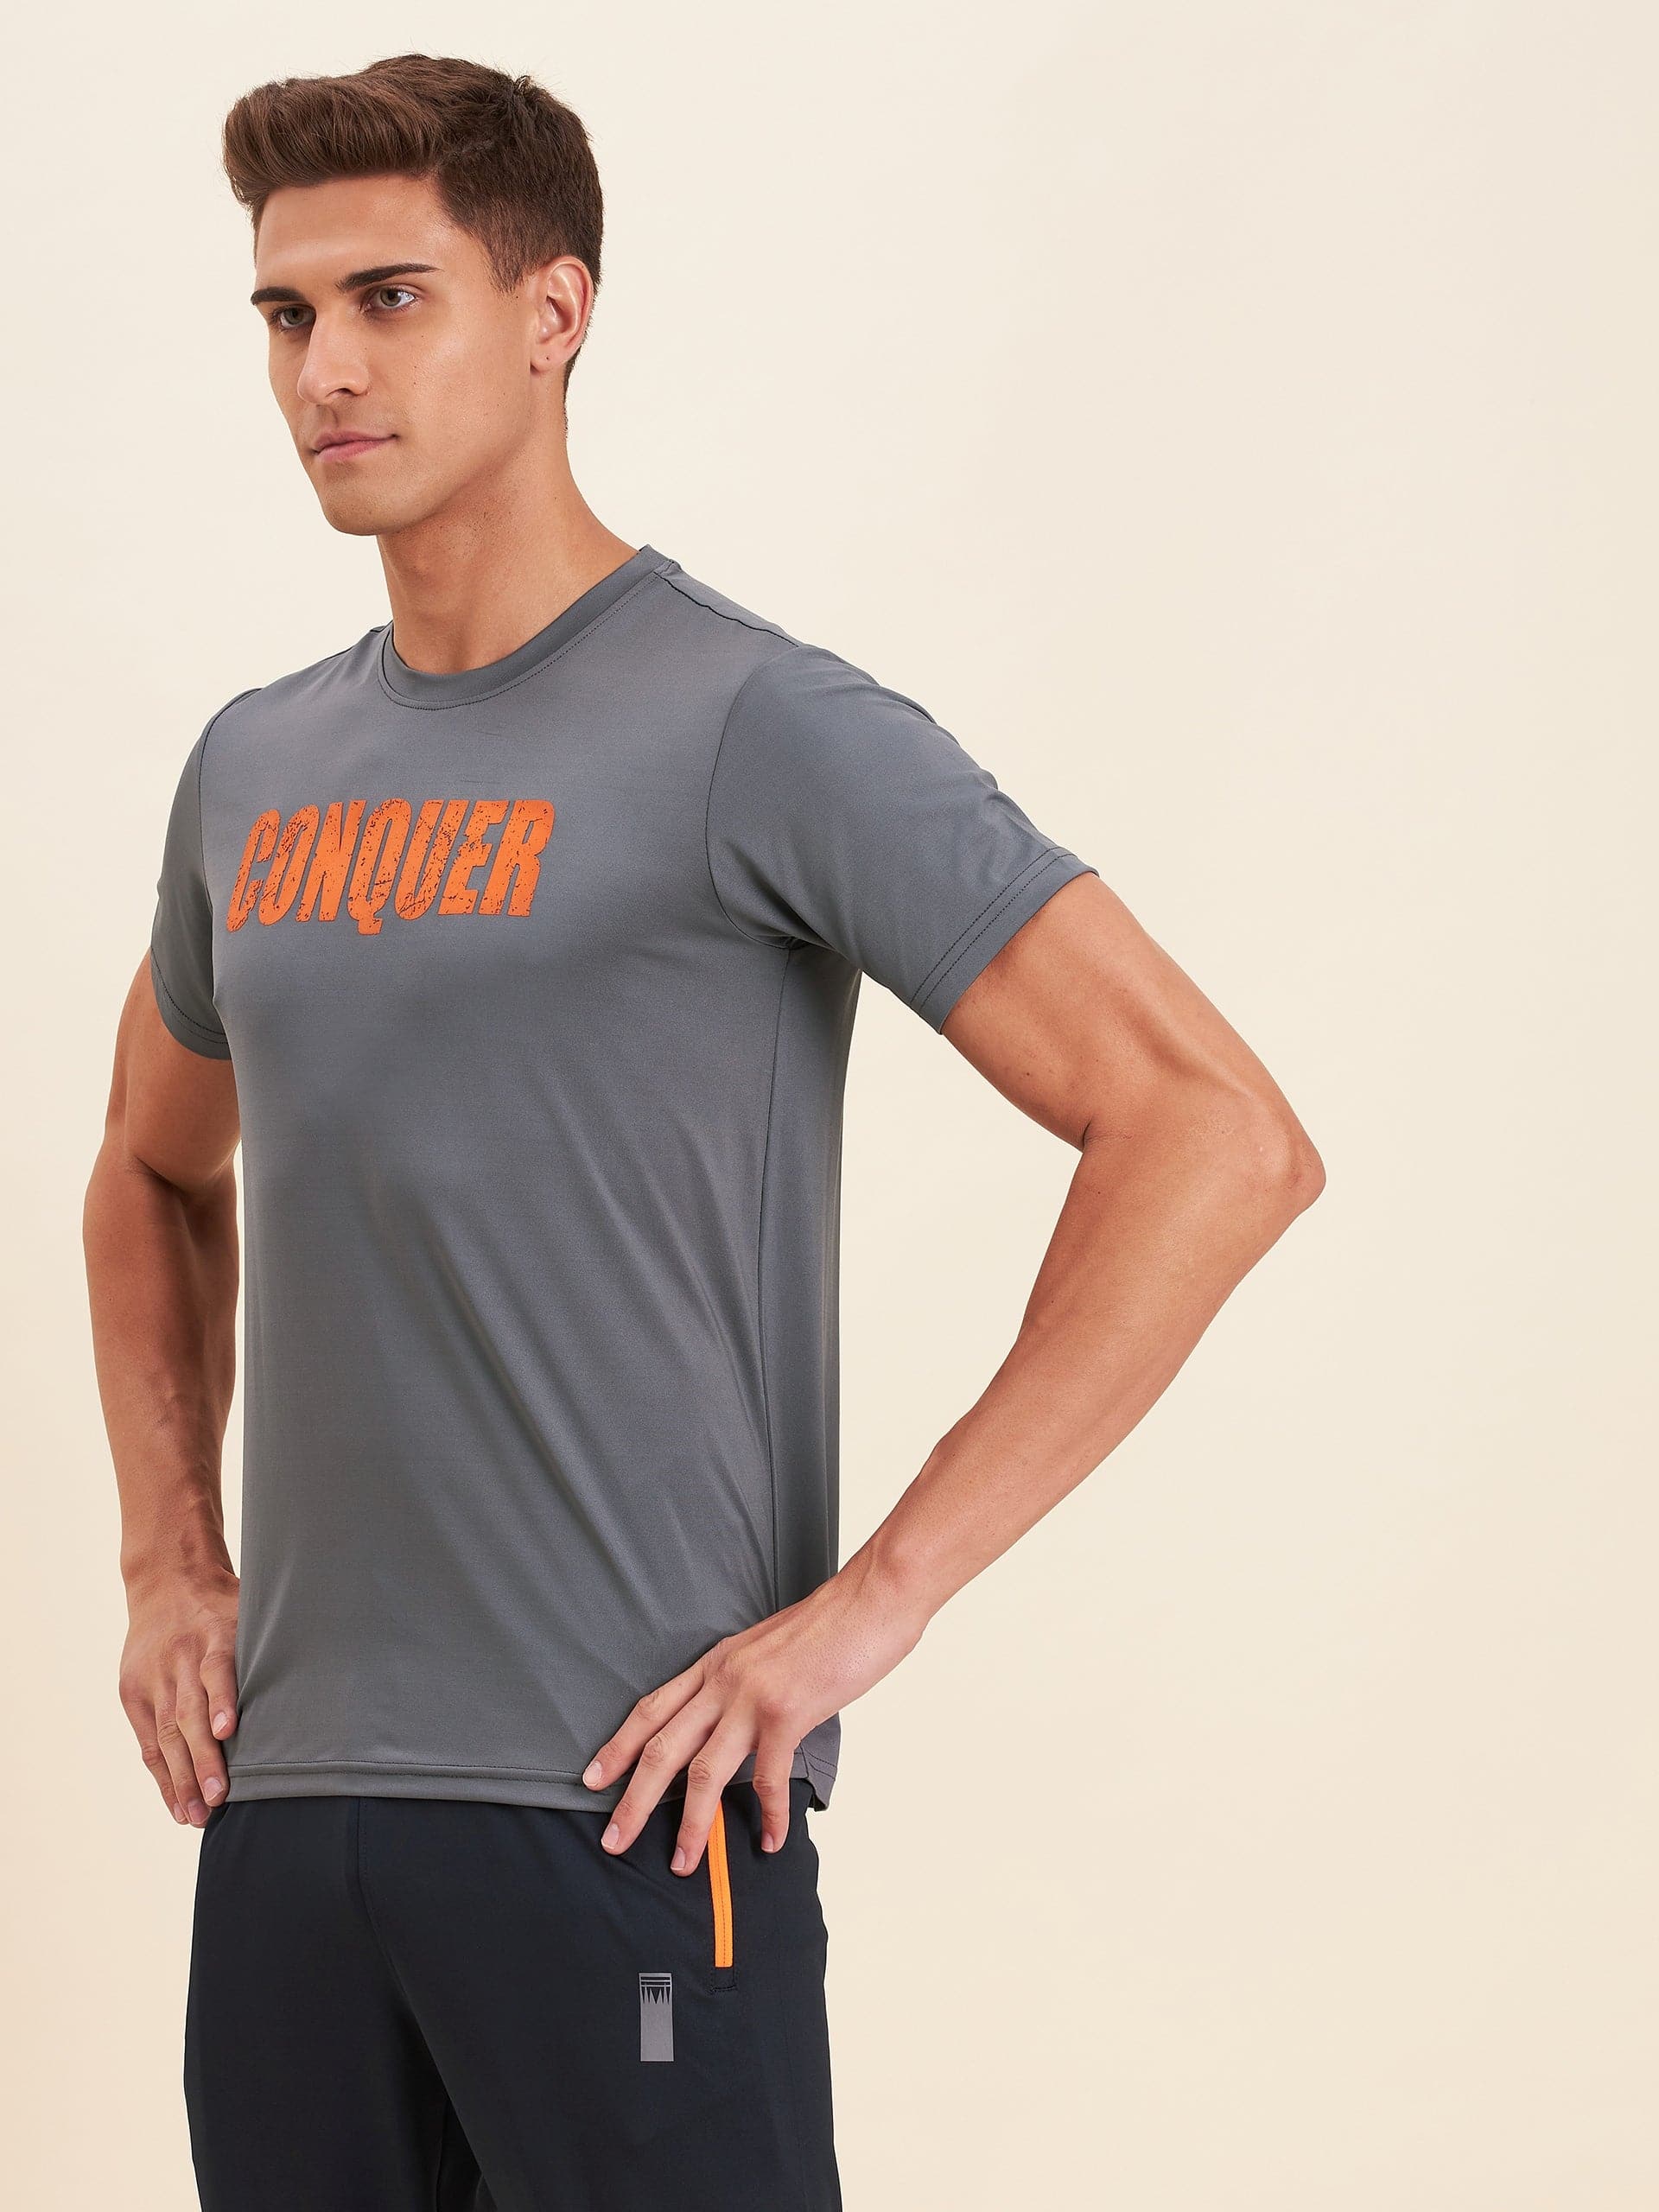 Men's Grey CONQUER Dry Fit T-Shirt - LYUSH-MASCLN